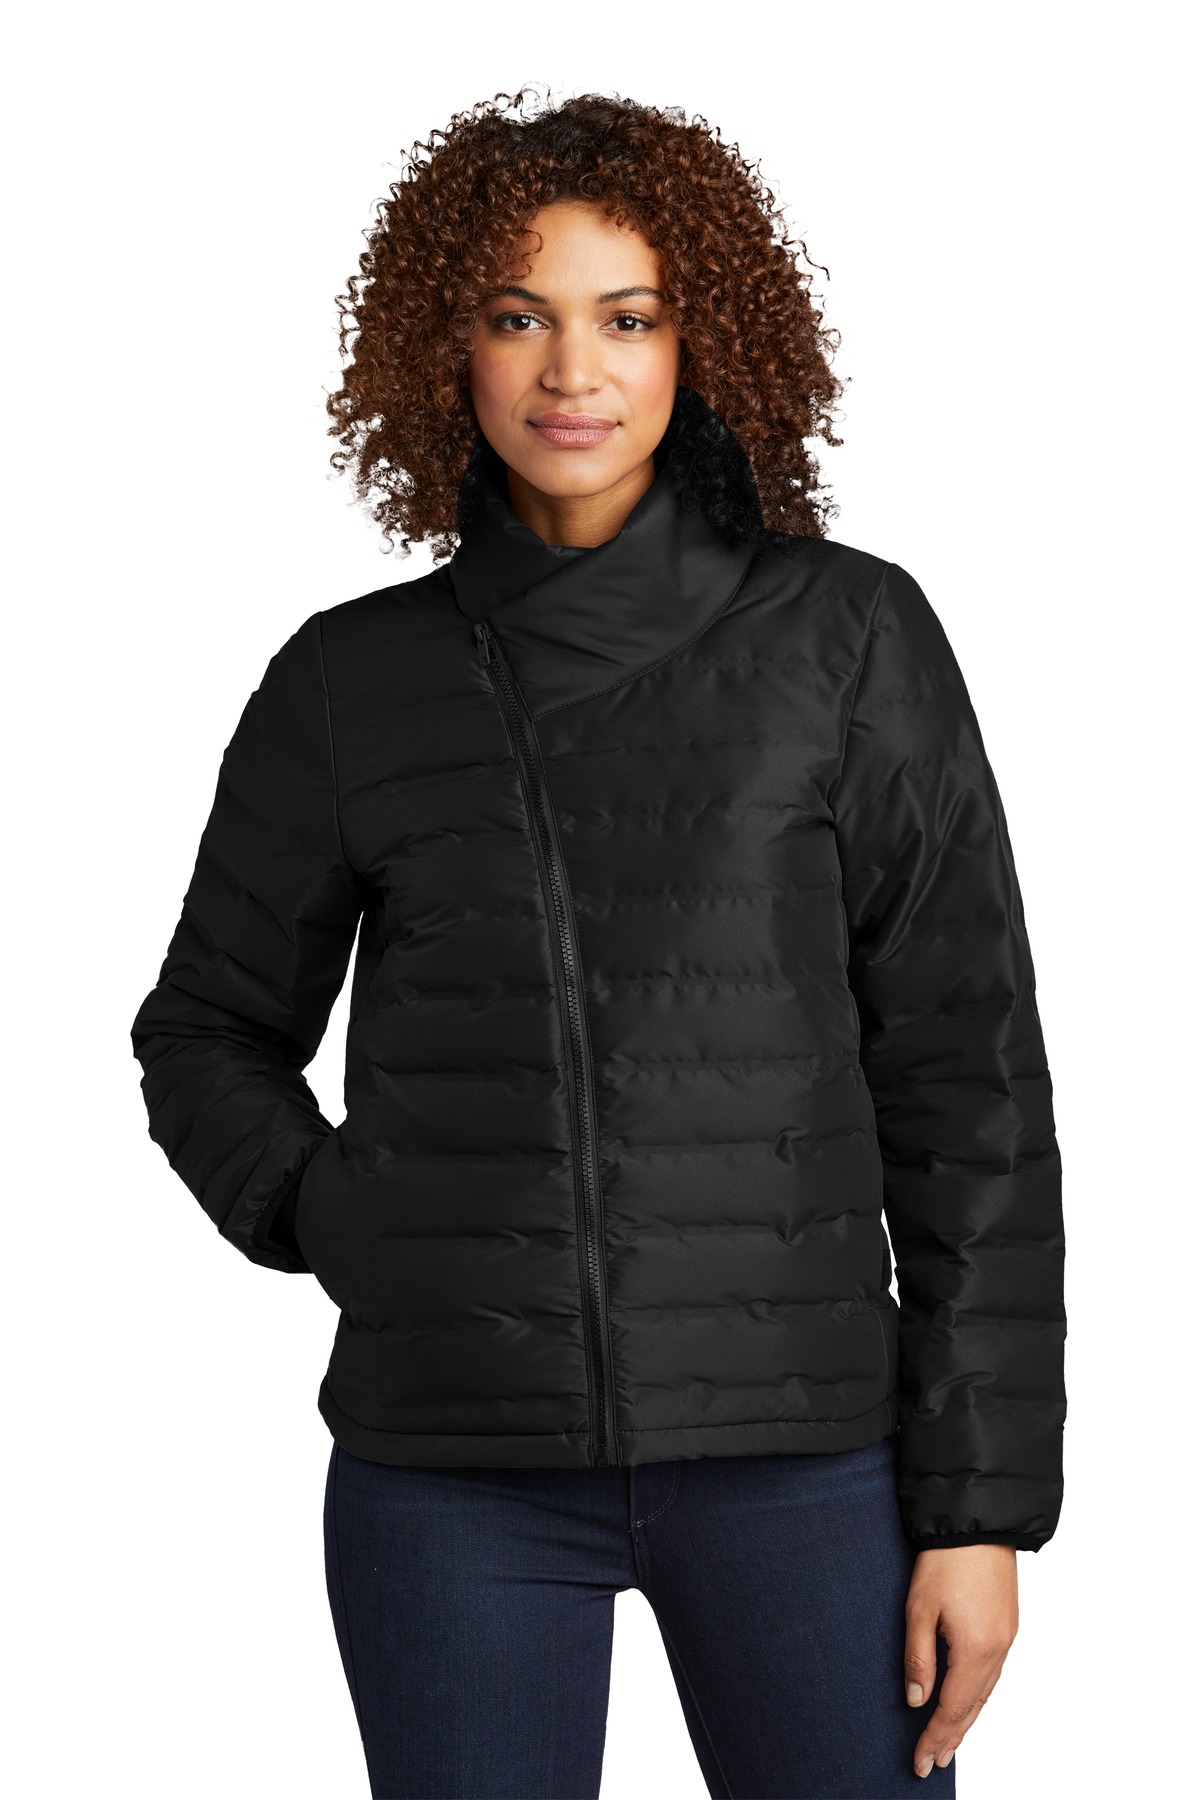 OGIO ® Ladies Street Puffy Full-Zip Jacket. – Armand Advertising, LLC